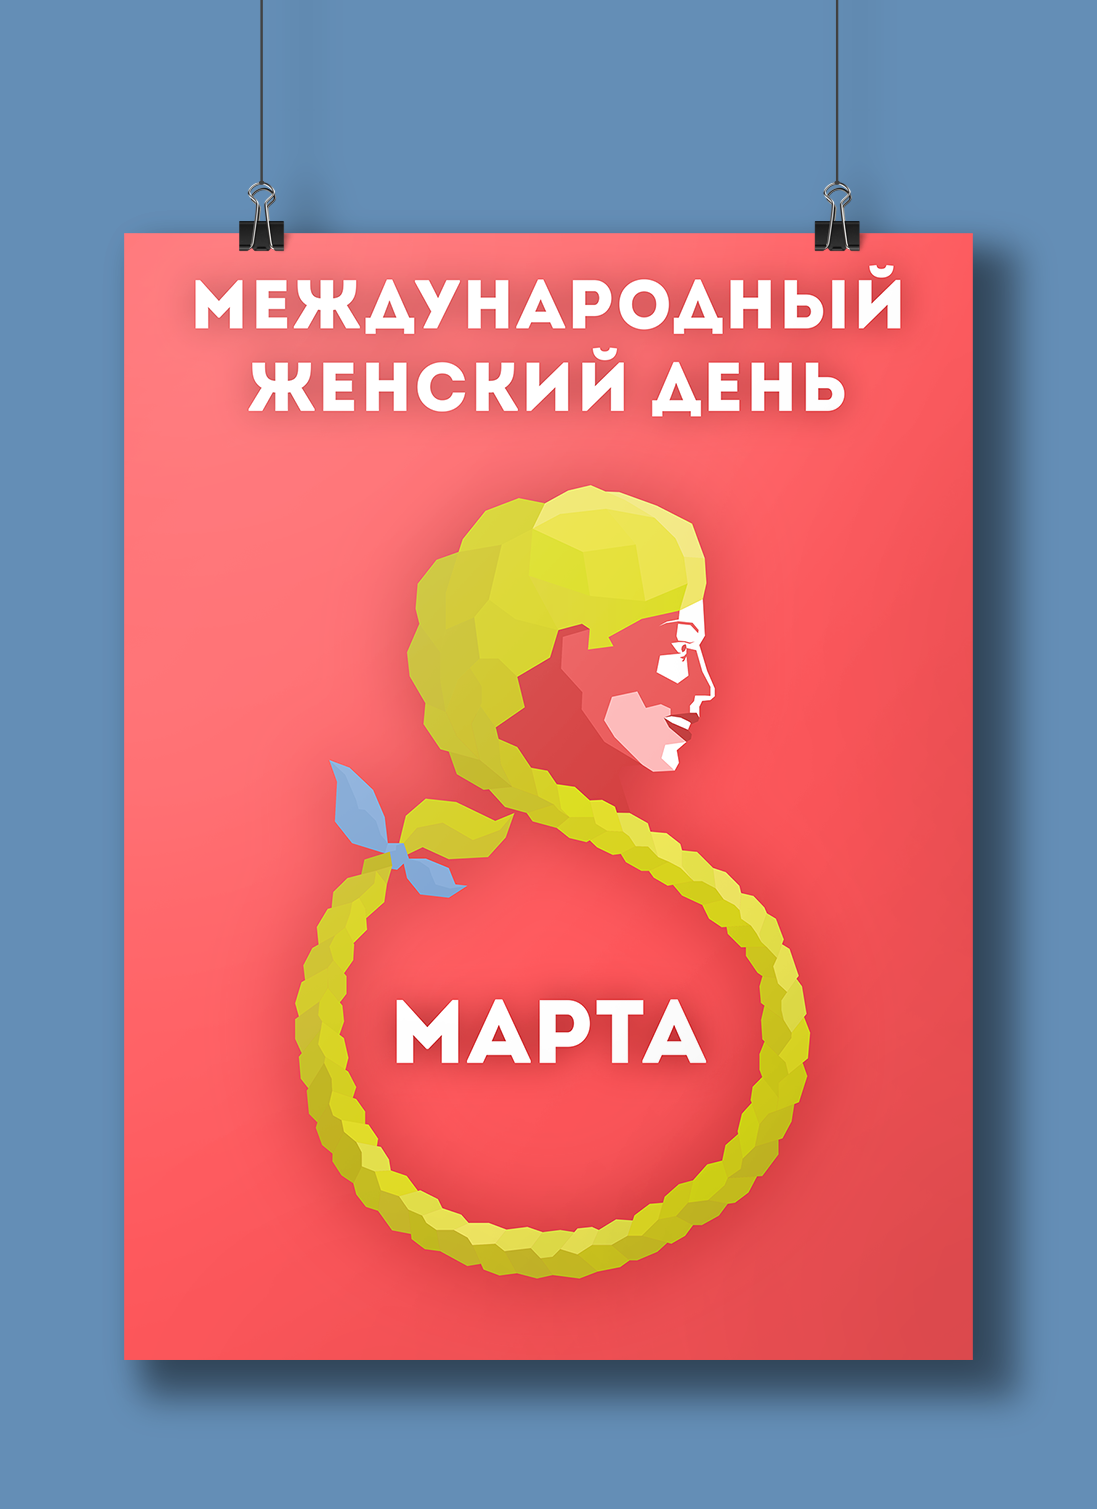 russian woman women International Womens day Soviet ussr Россия animated creative arts graphic design